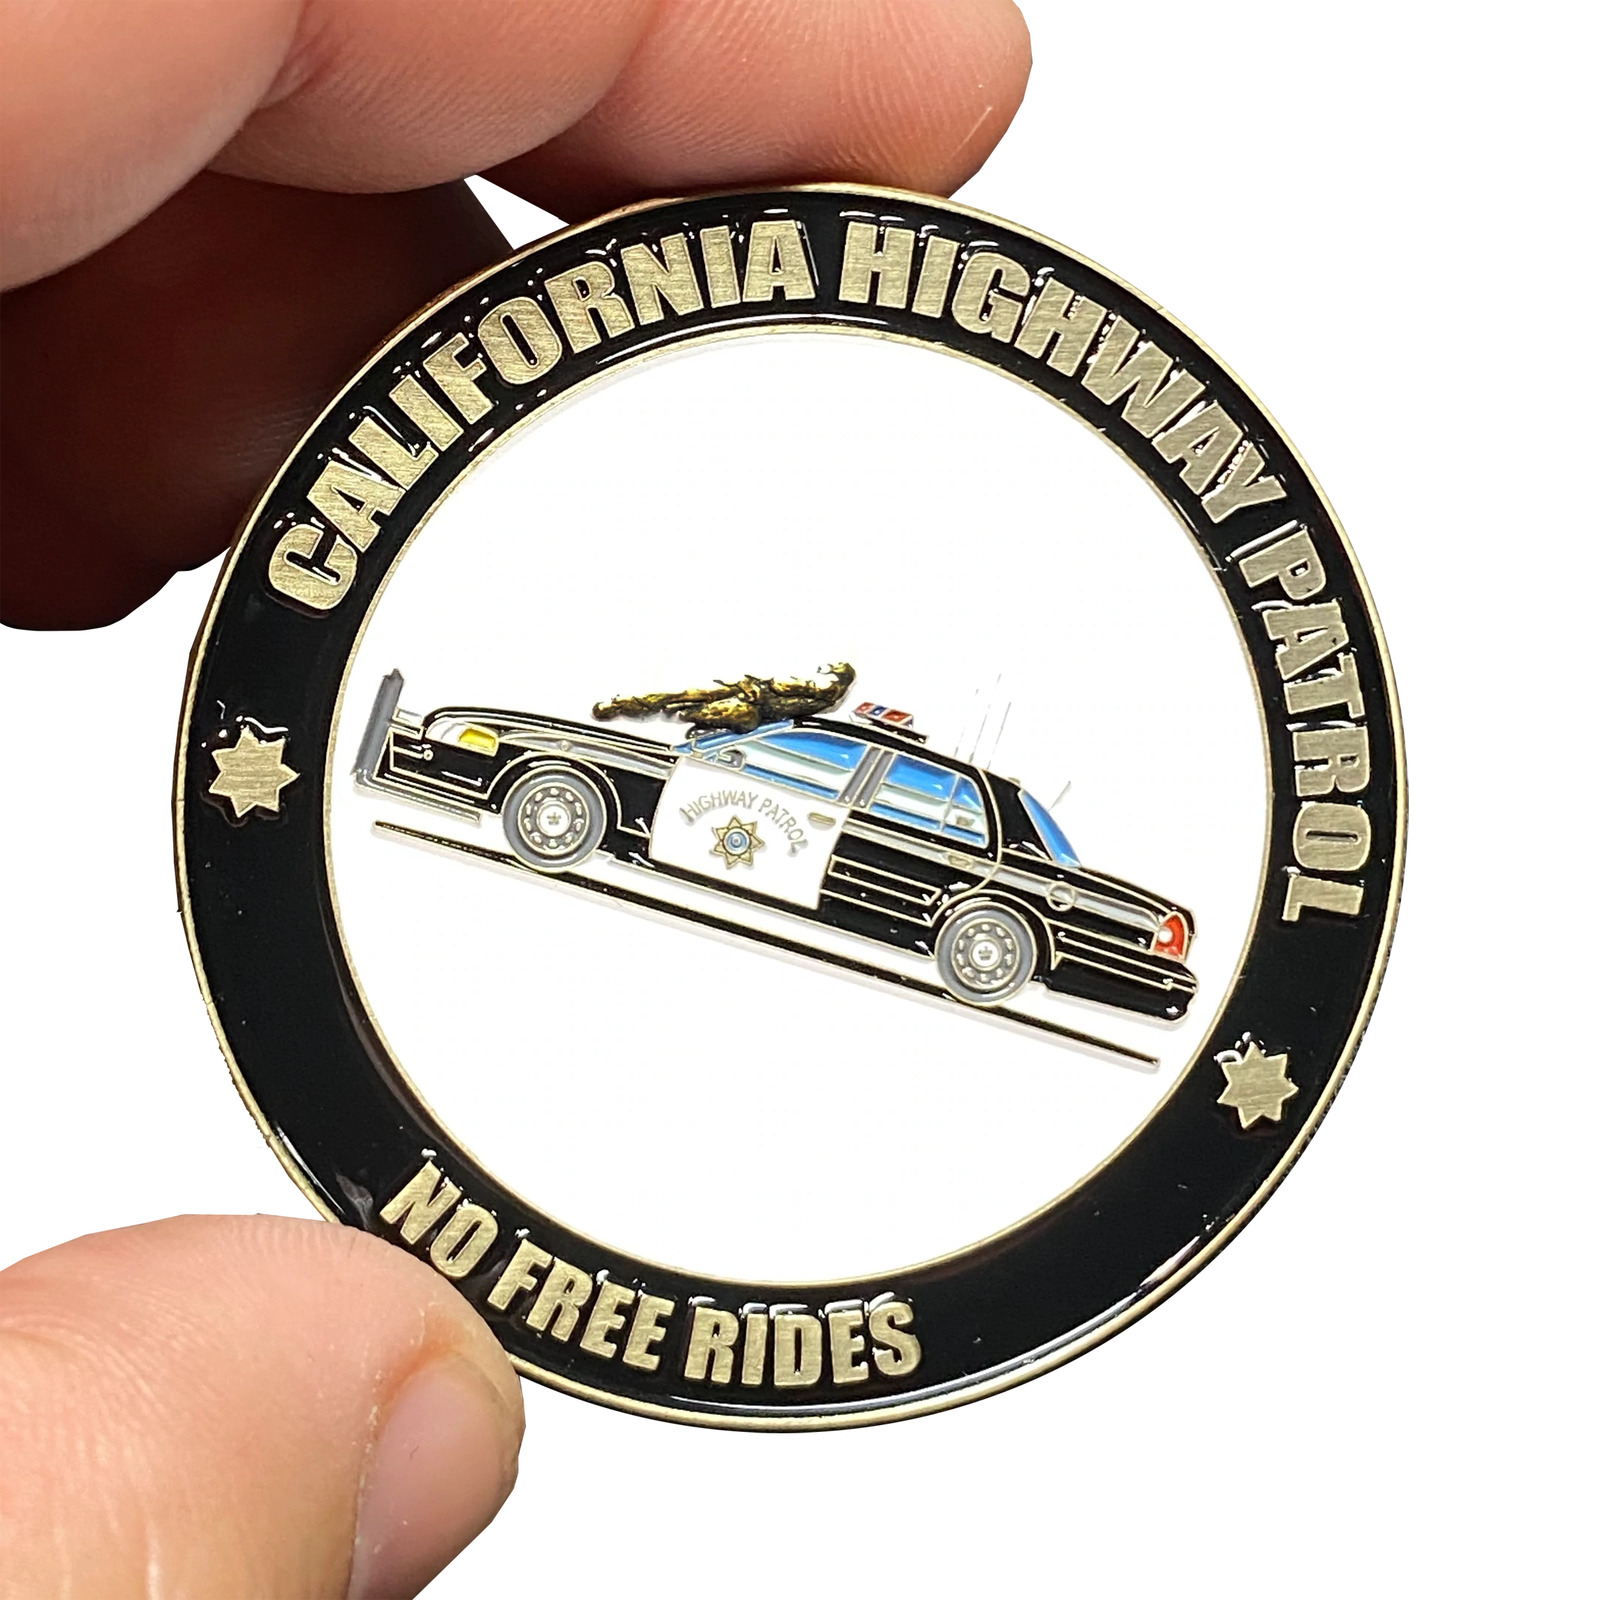 EE-003 California Highway Patrol Civil Unrest Riot CHP No Free Rides Police Car